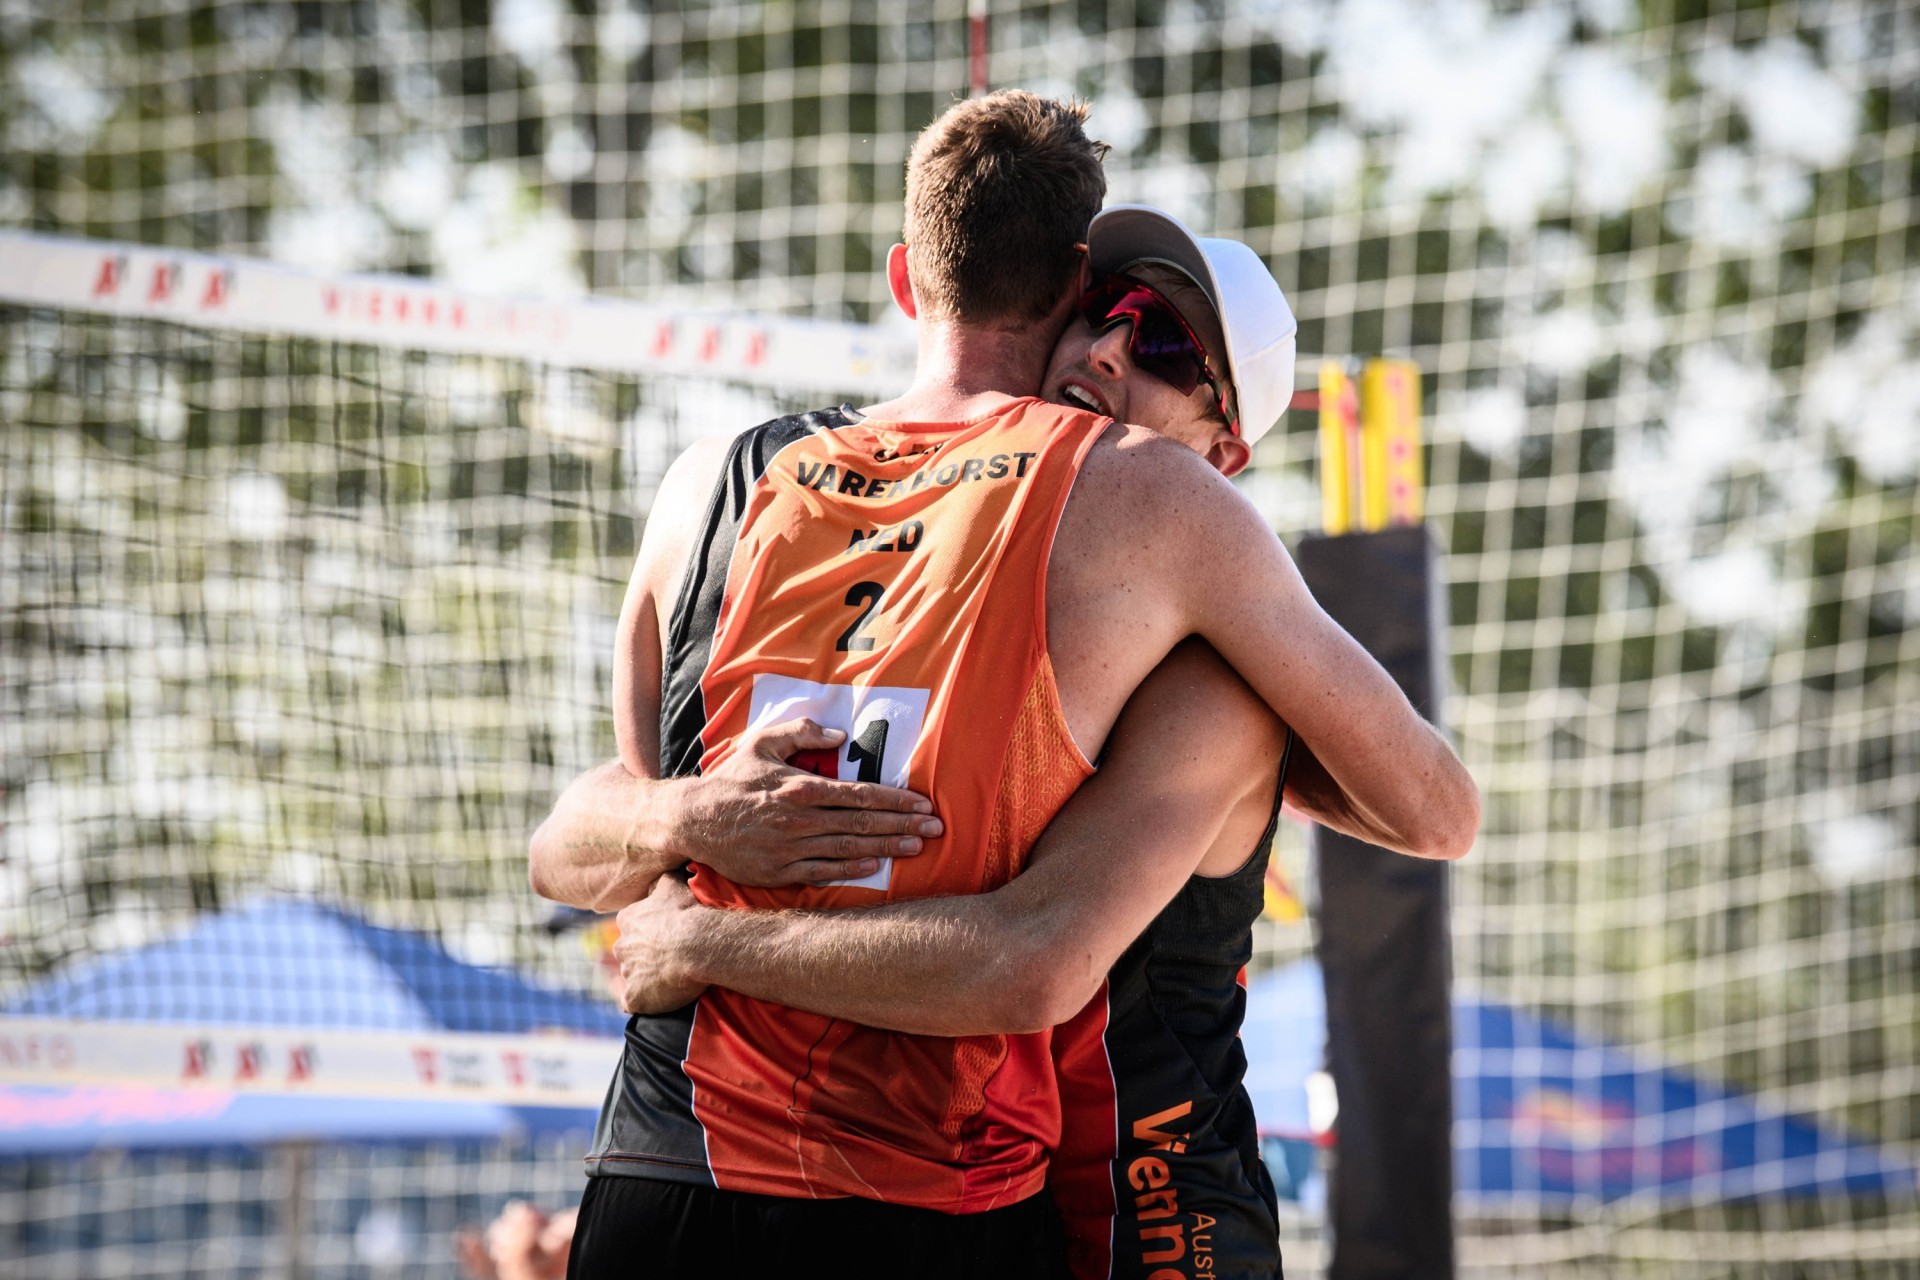 Varenhorst and van de Velde celebrate their victory over the reigning world champions